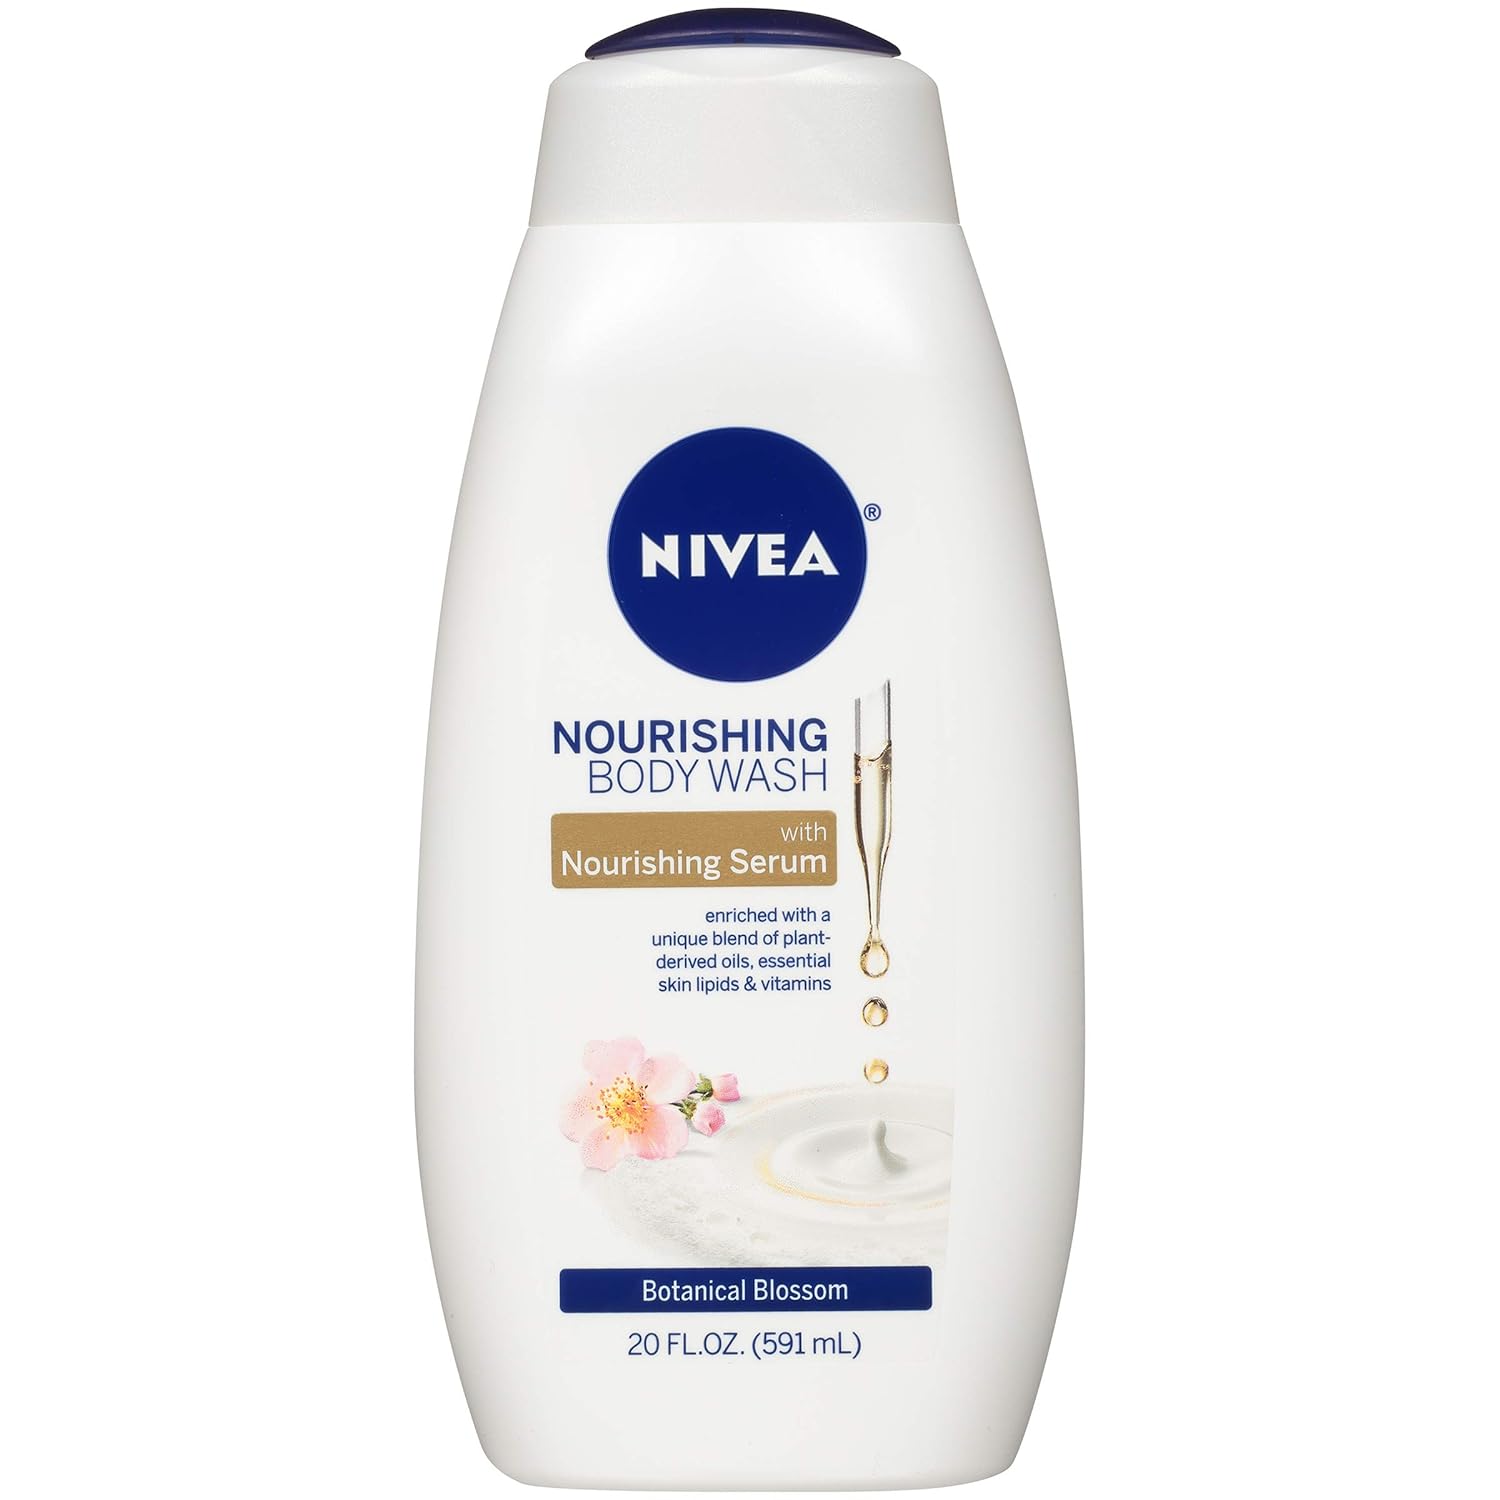 NIVEA Nourishing Botanical Blossom Body Wash for Dry Skin, 20 Fl Oz